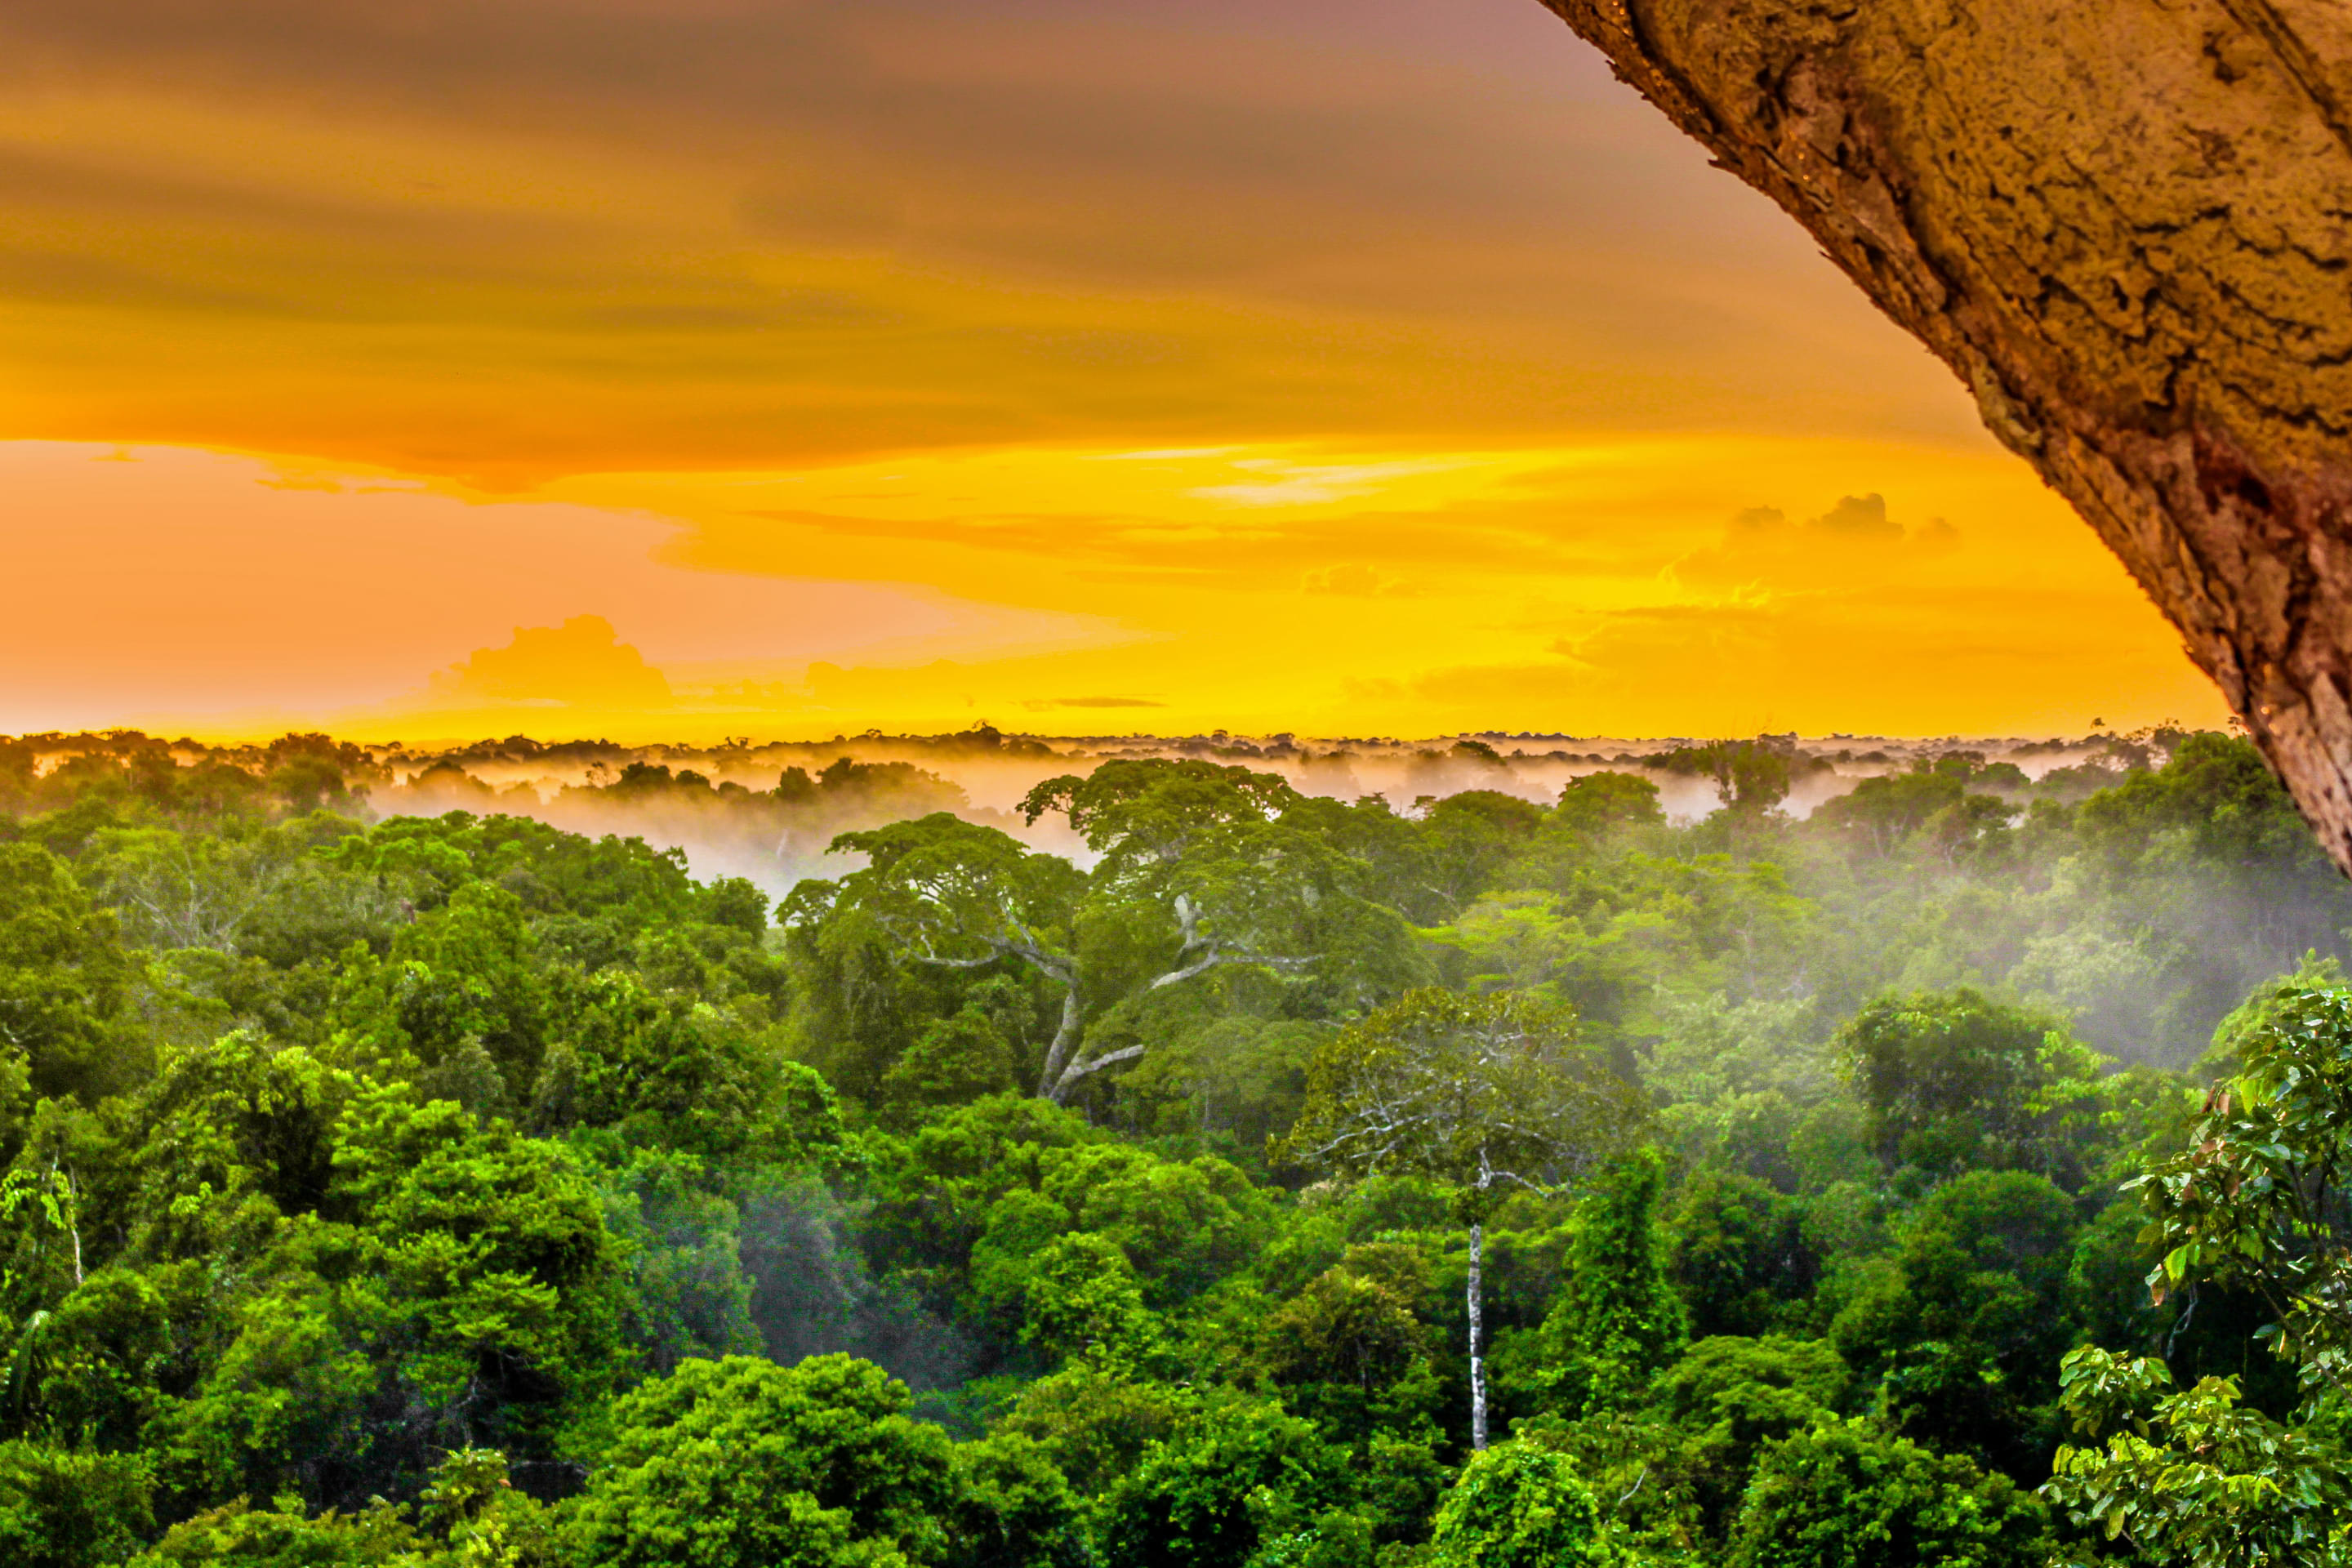 The Amazon Rainforest Overview